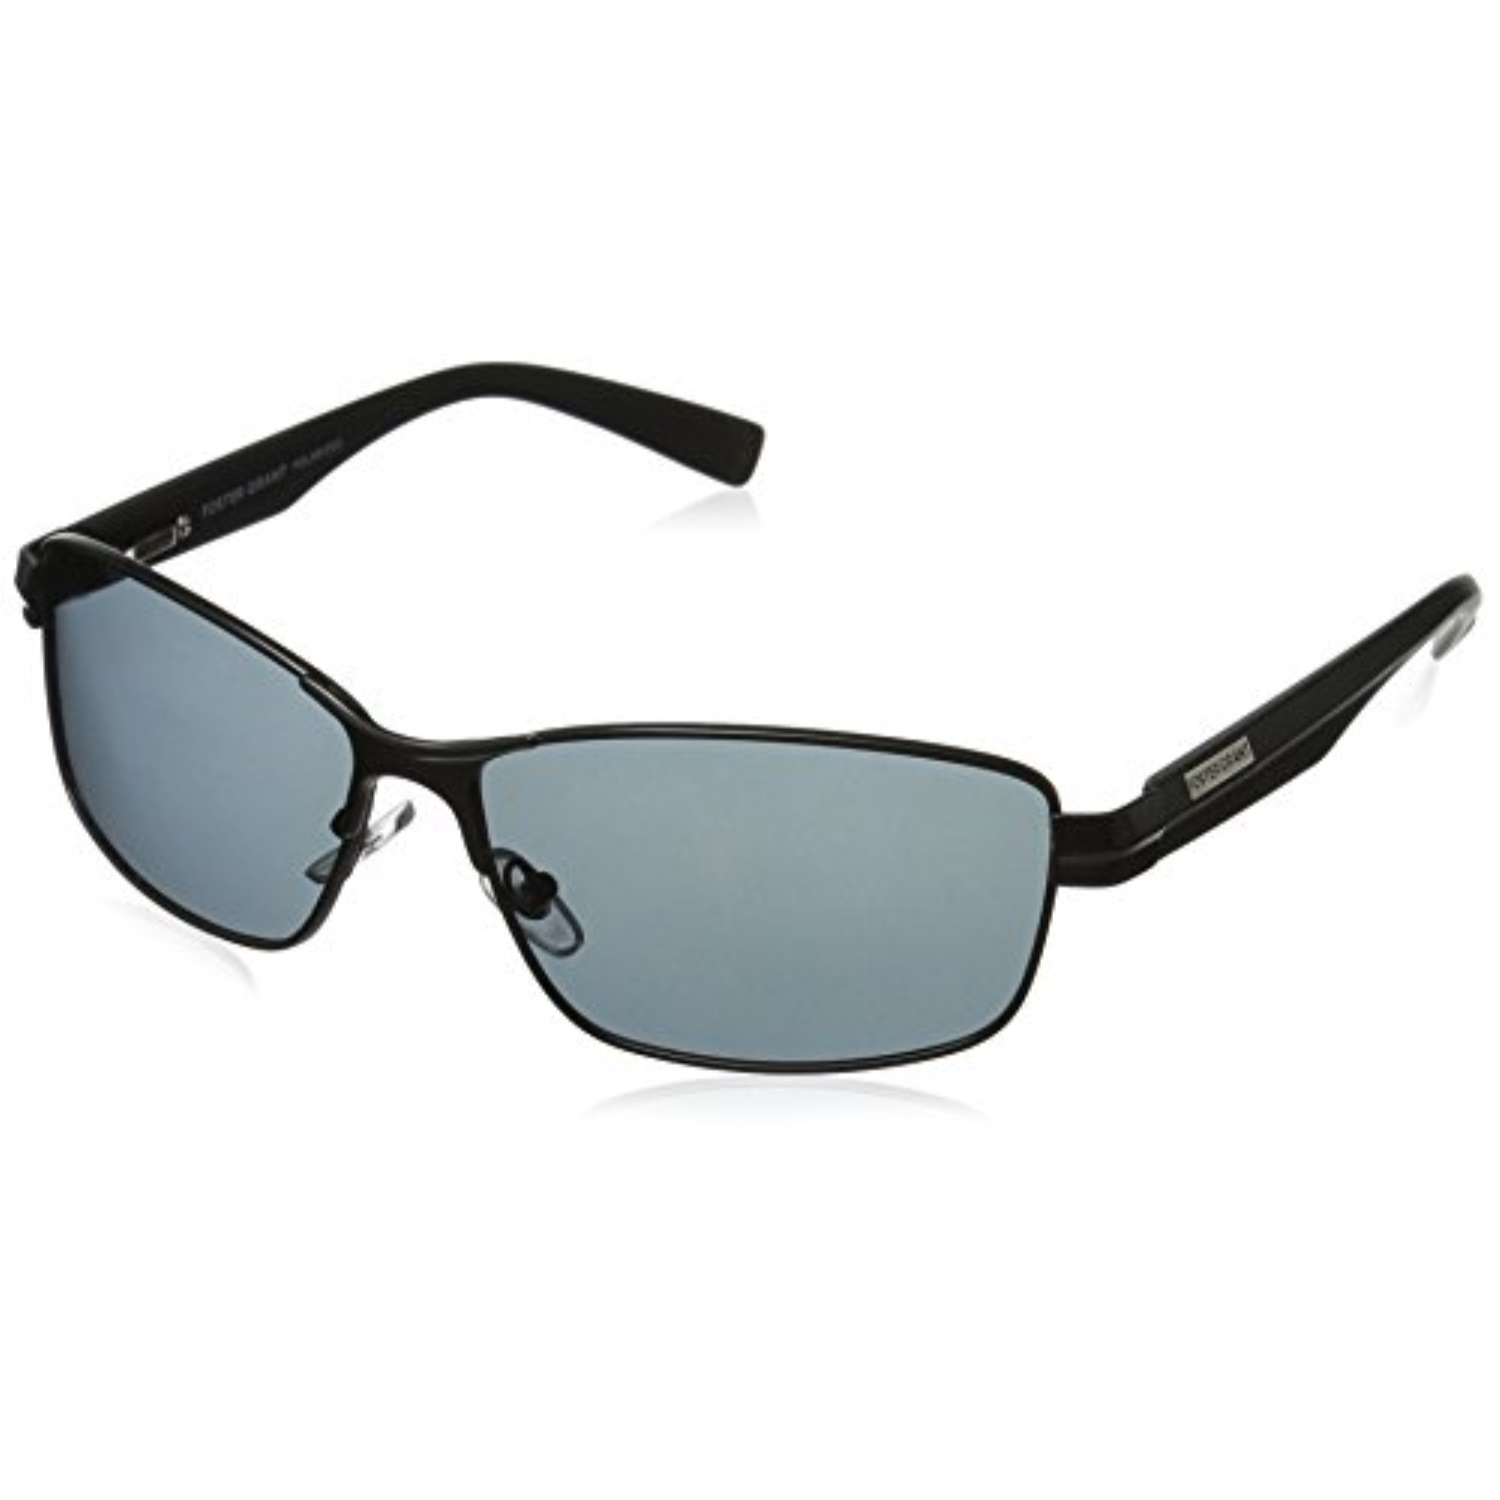 foster grant men's transport polarized 10229235.com polarized rectangular sunglasses, black, 140 mm - image 1 of 5